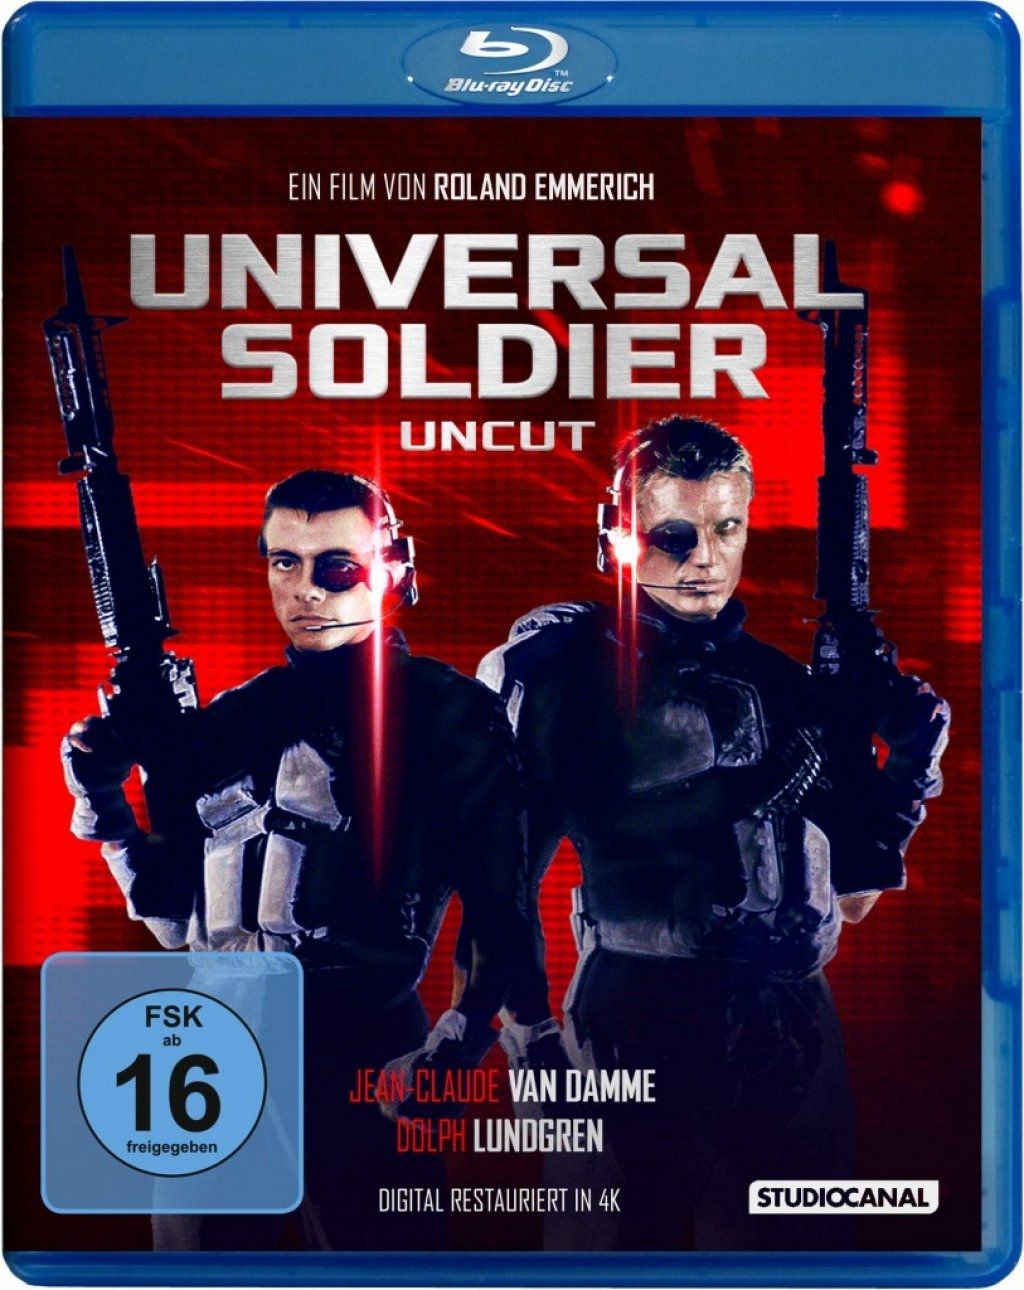 Universal Soldier (Uncut) (Digital Remastered) (BLURAY)